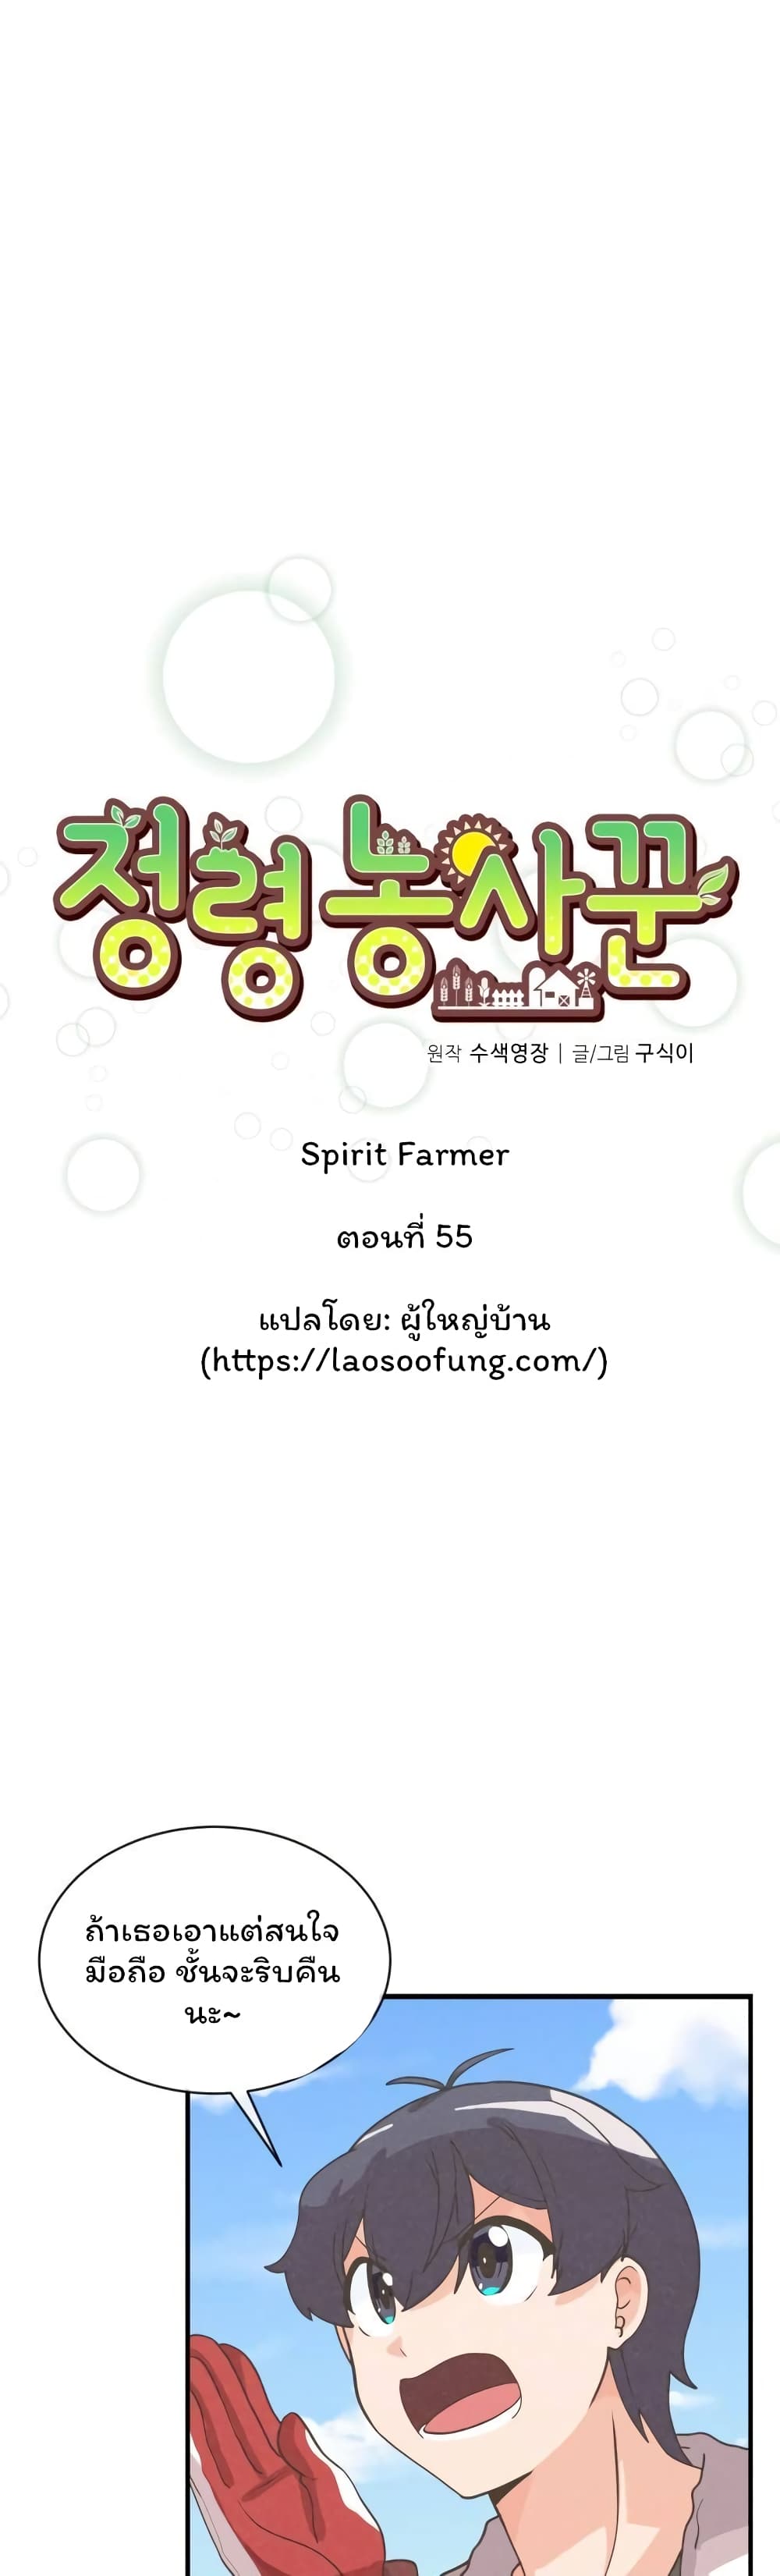 Spirit Farmer 55-55